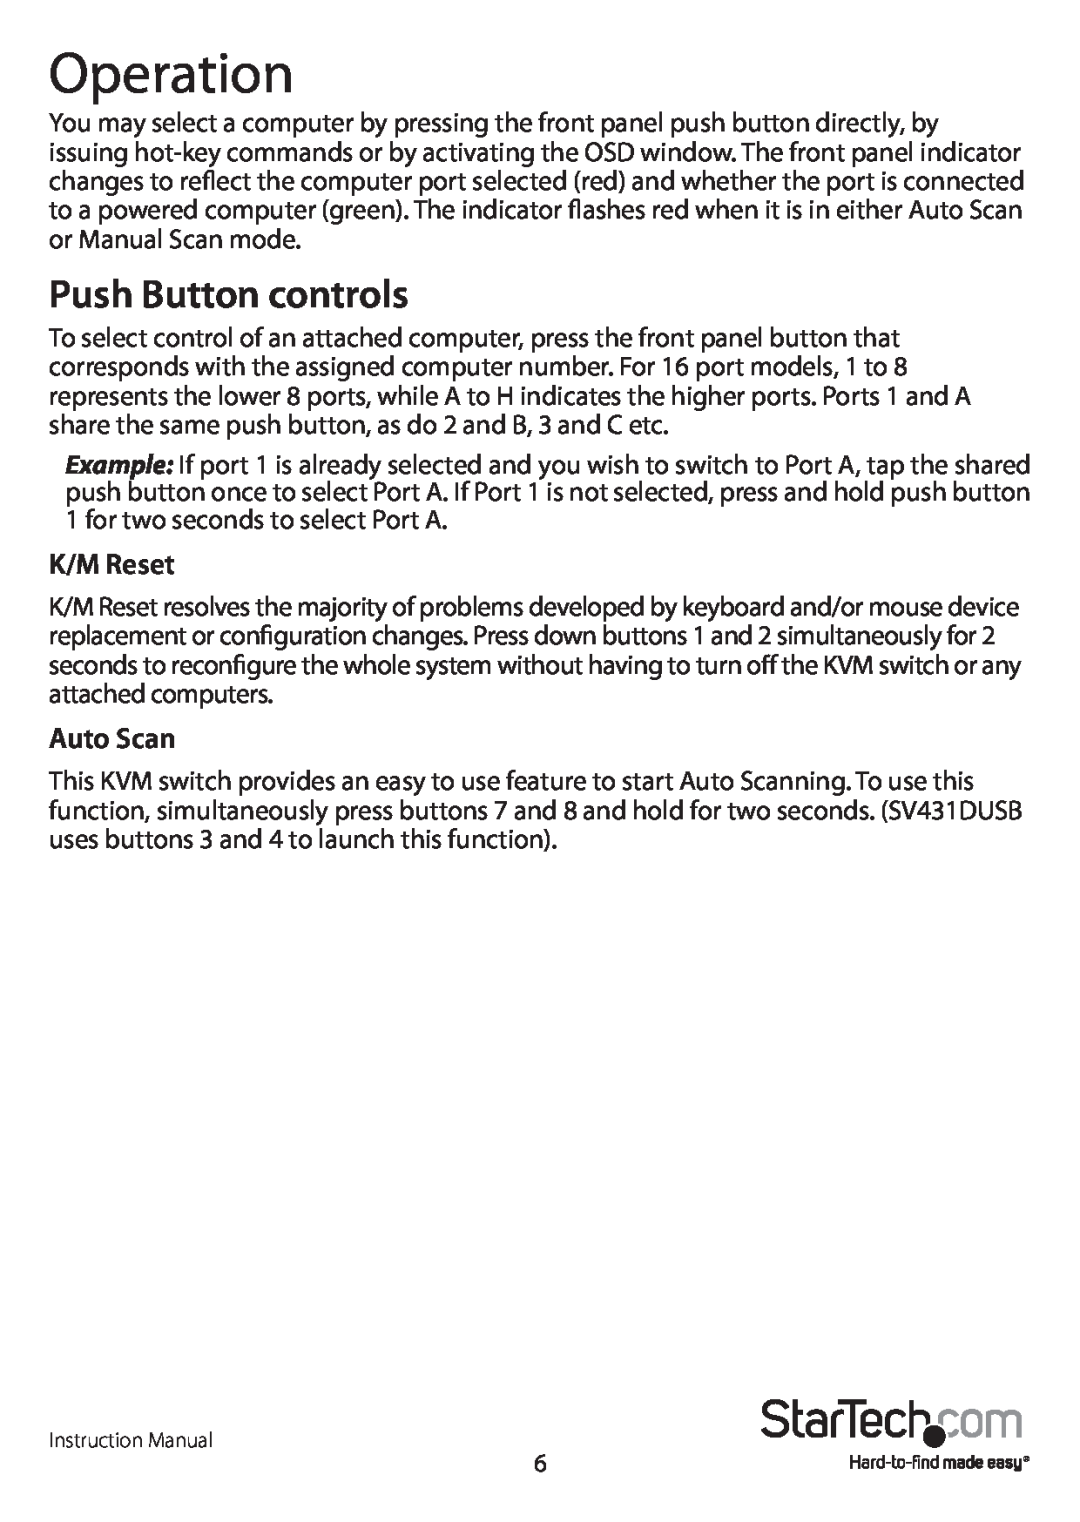 StarTech.com sv431dusb manual Operation, Push Button controls, K/M Reset, Auto Scan 